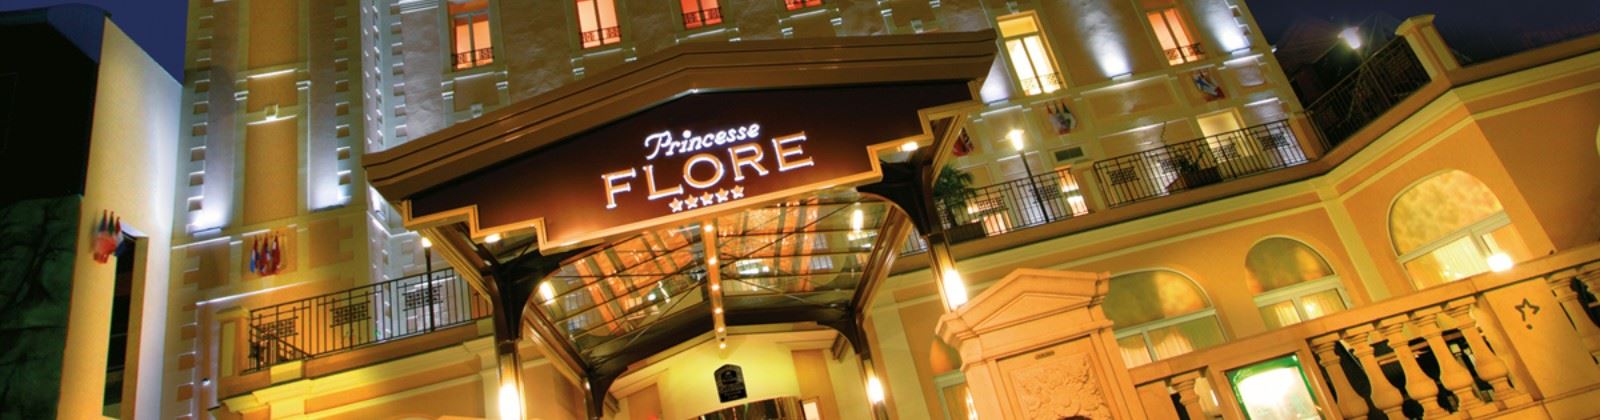 hotel princesse flore olevene restaurant events 